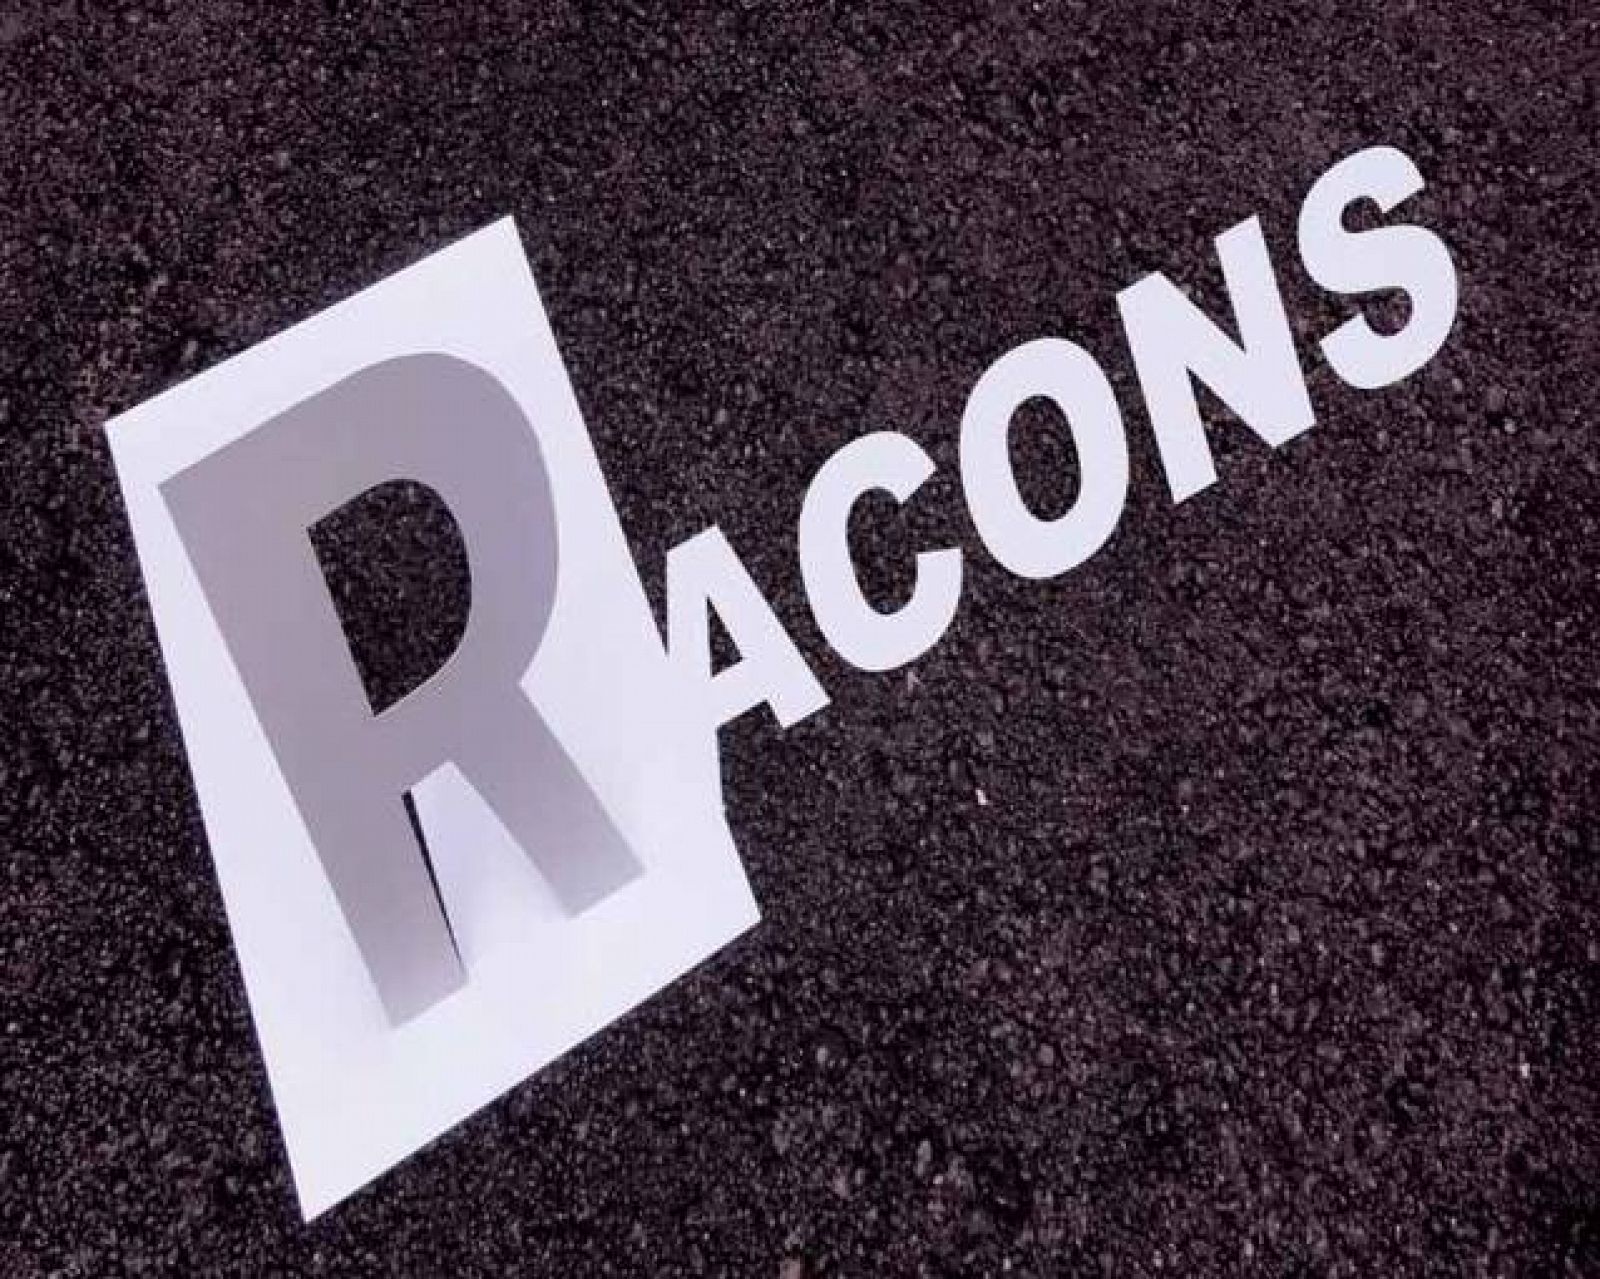 Logo del programa "Racons"